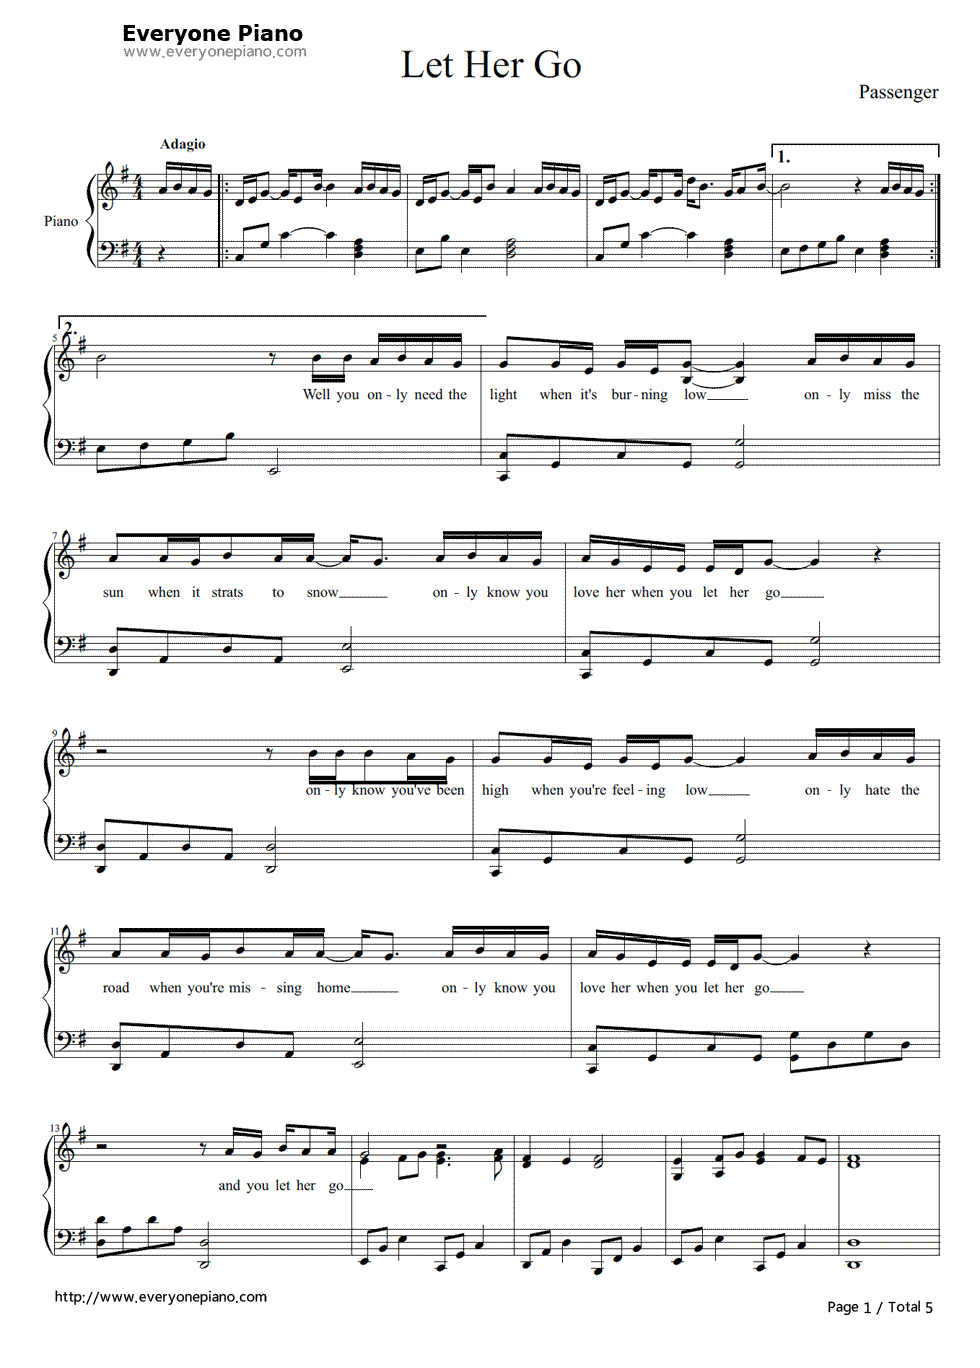 Free Let Her Go-Passenger（Mike Rosenberg） Sheet Music Preview 1 - Let Her Go Piano Sheet Music Free Printable